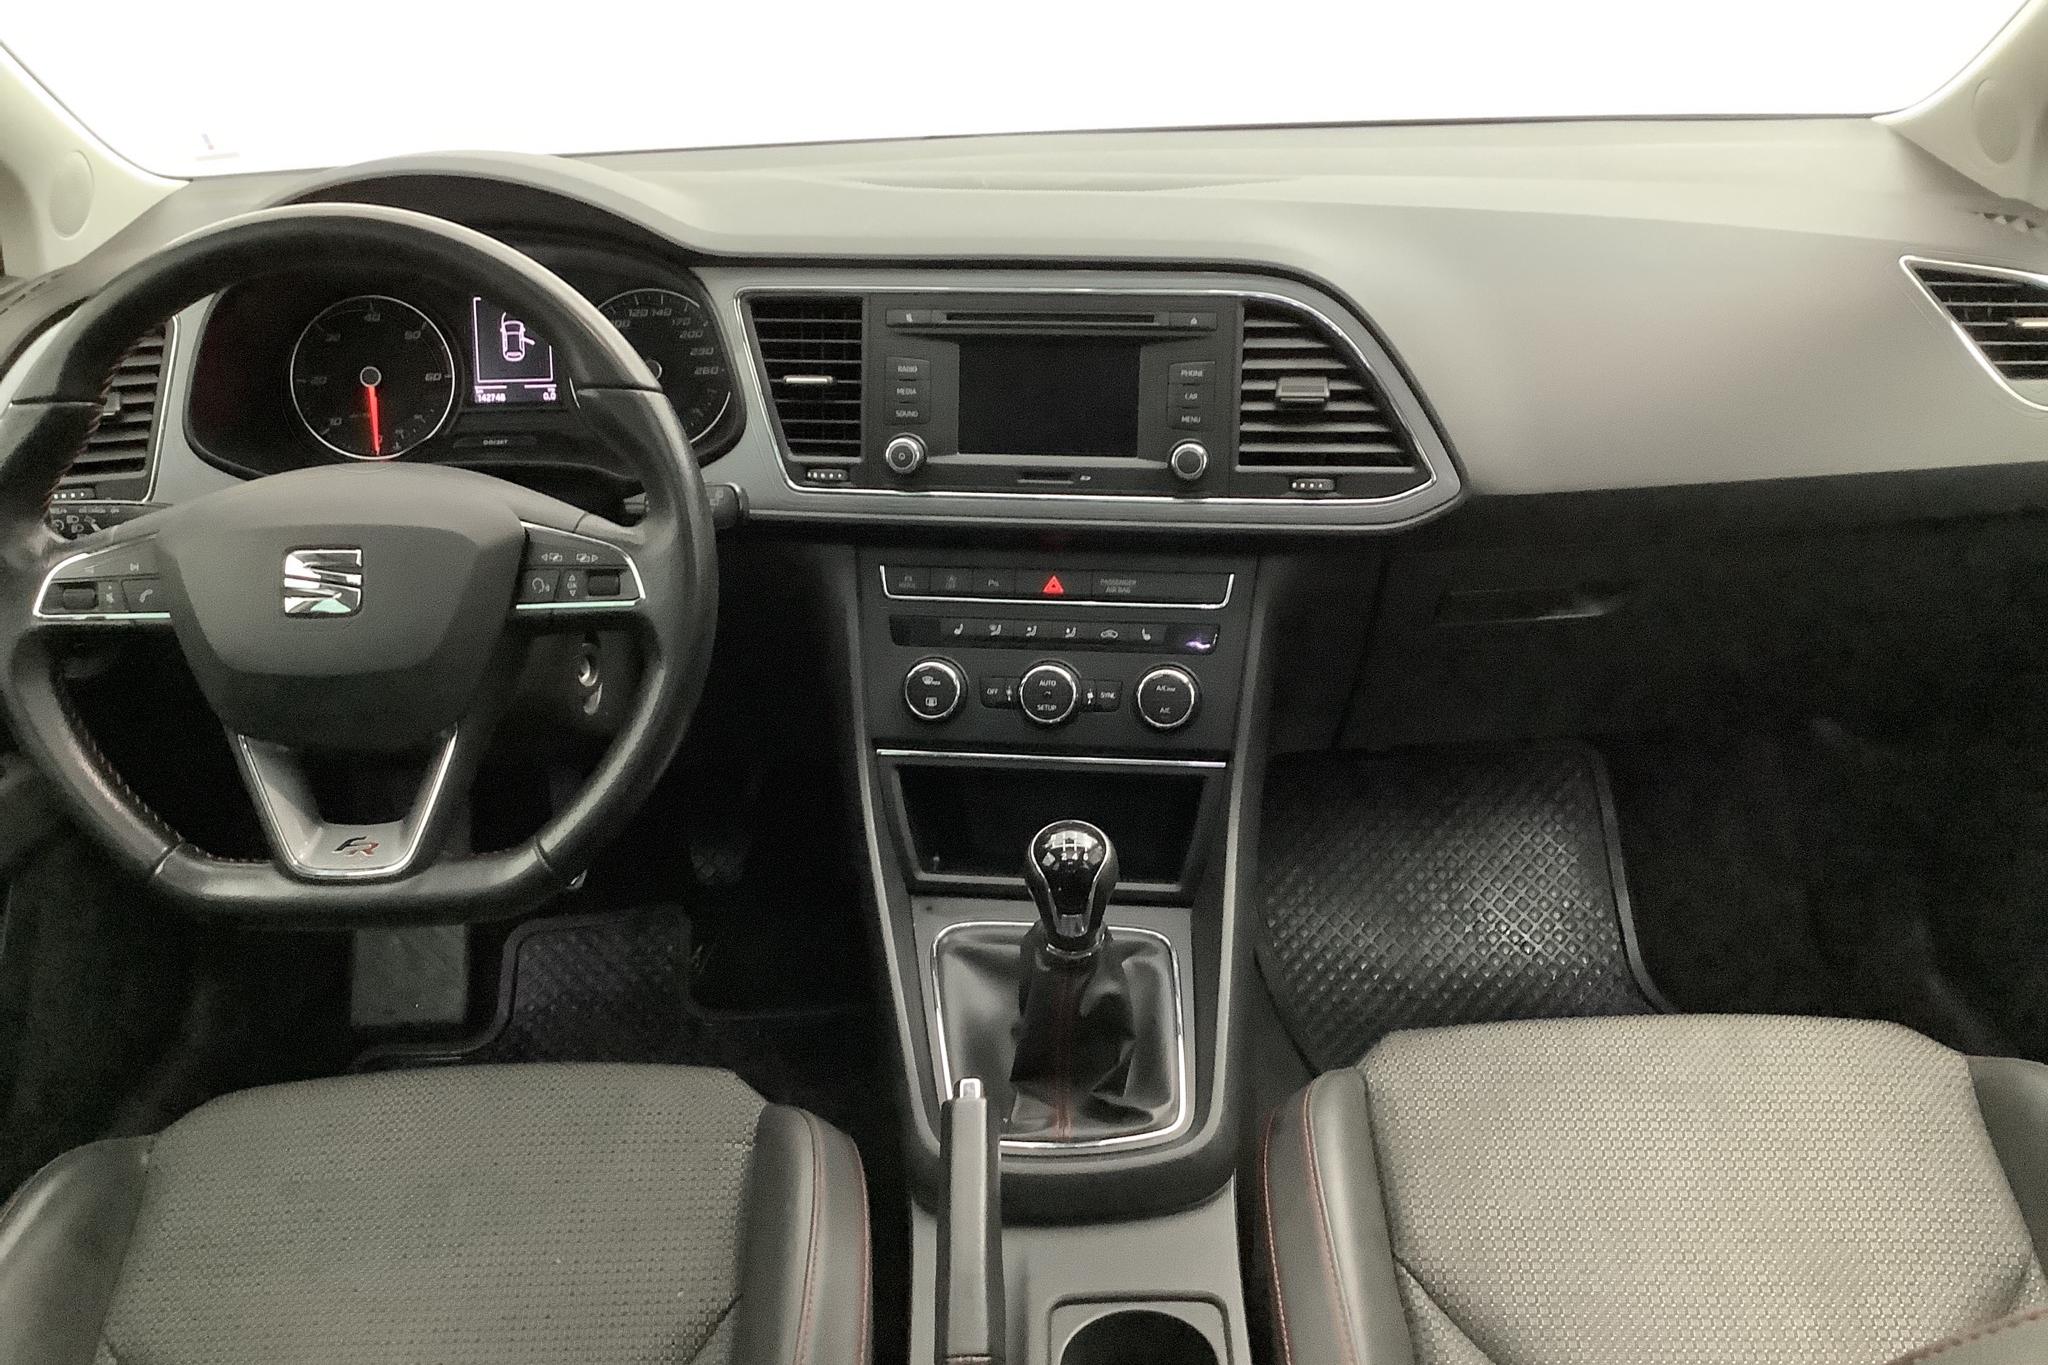 Seat Leon 2.0 TDI 5dr (184hk) - 142 750 km - Manual - black - 2015